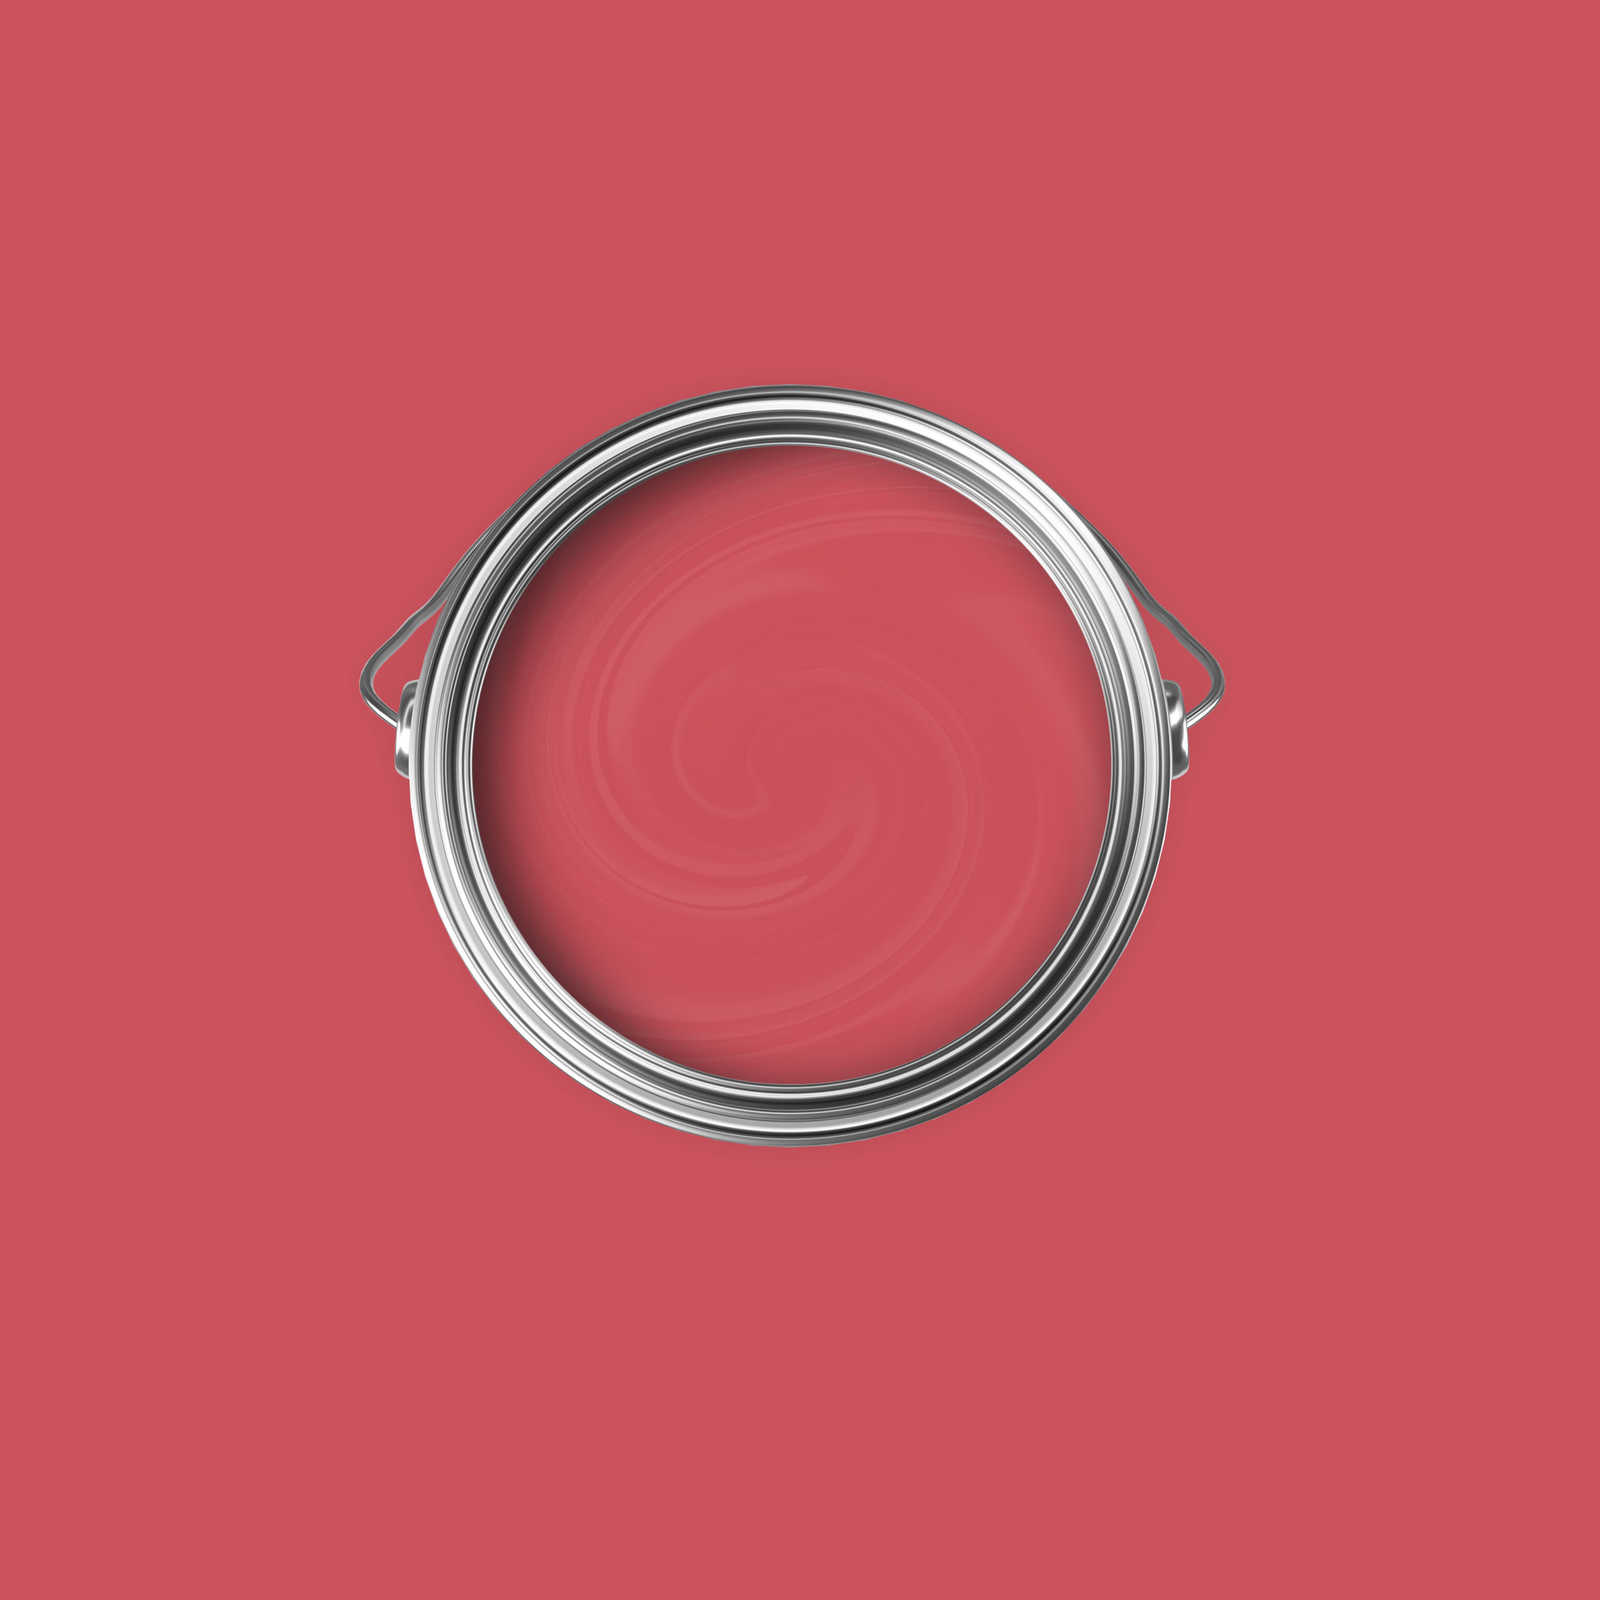             Premium Wandfarbe kräftiges Pink »Blooming Blossom« NW1019 – 2,5 Liter
        